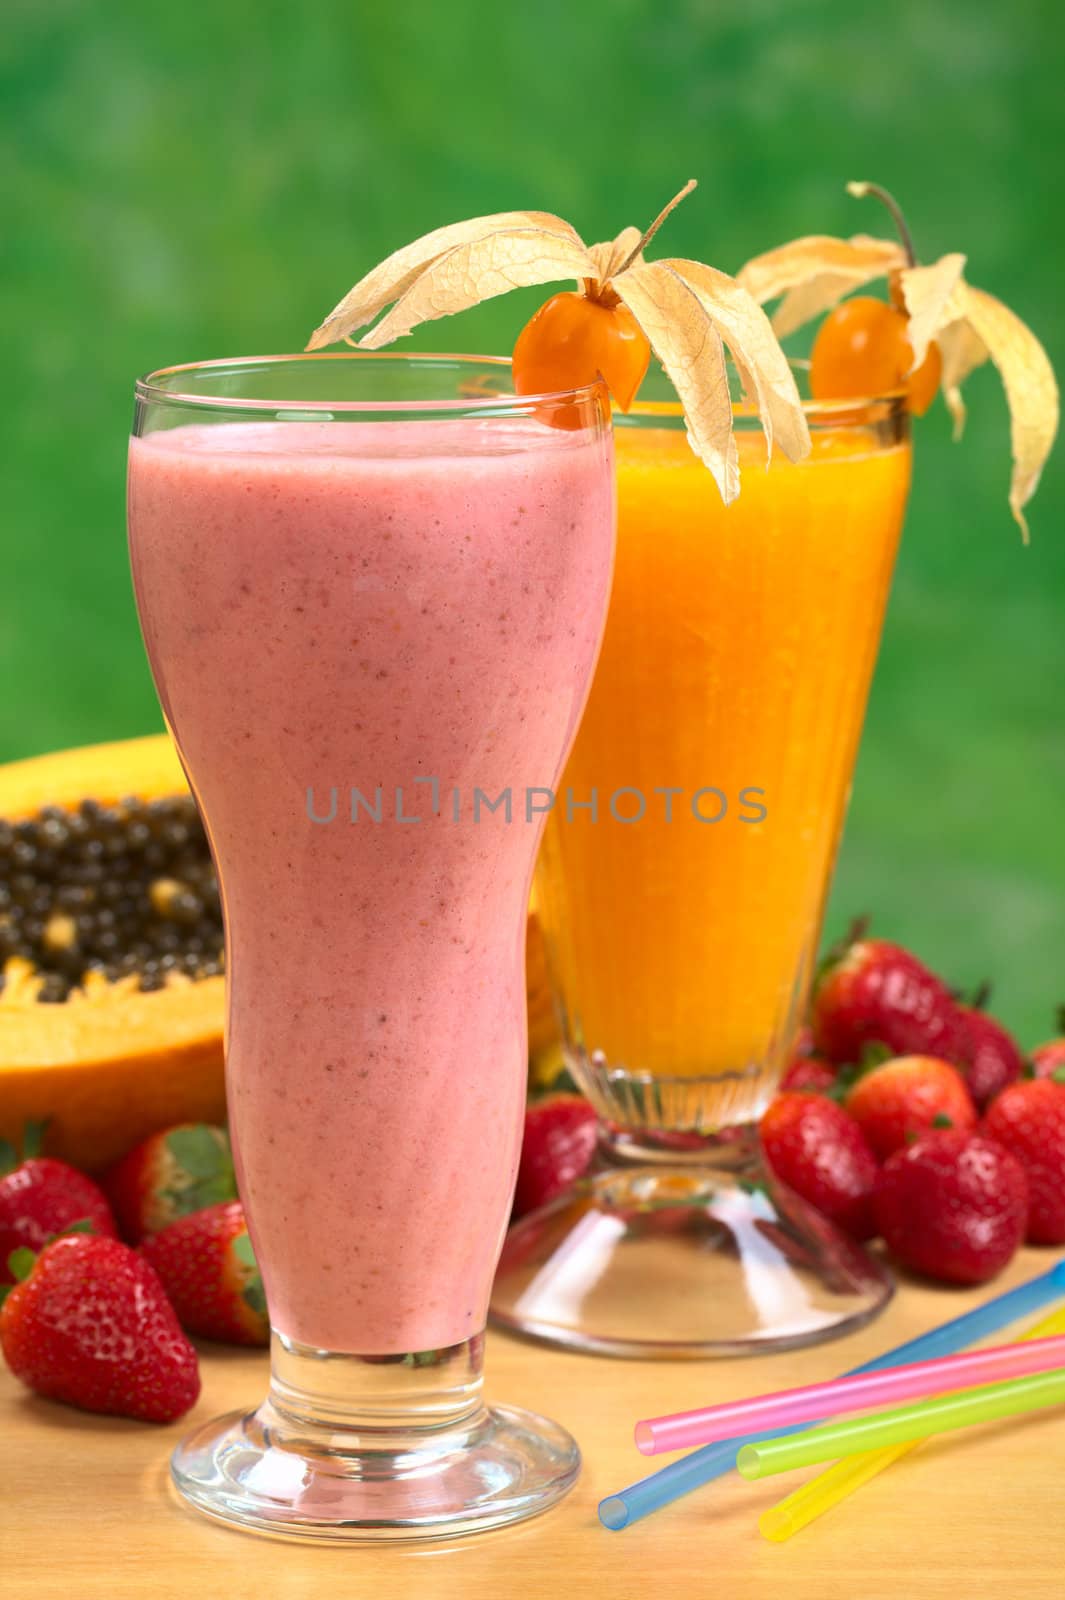 Strawberry milkshake and papaya juice garnished with physalis (Selective Focus, Focus on the physalis on the strawberry milkshake) 